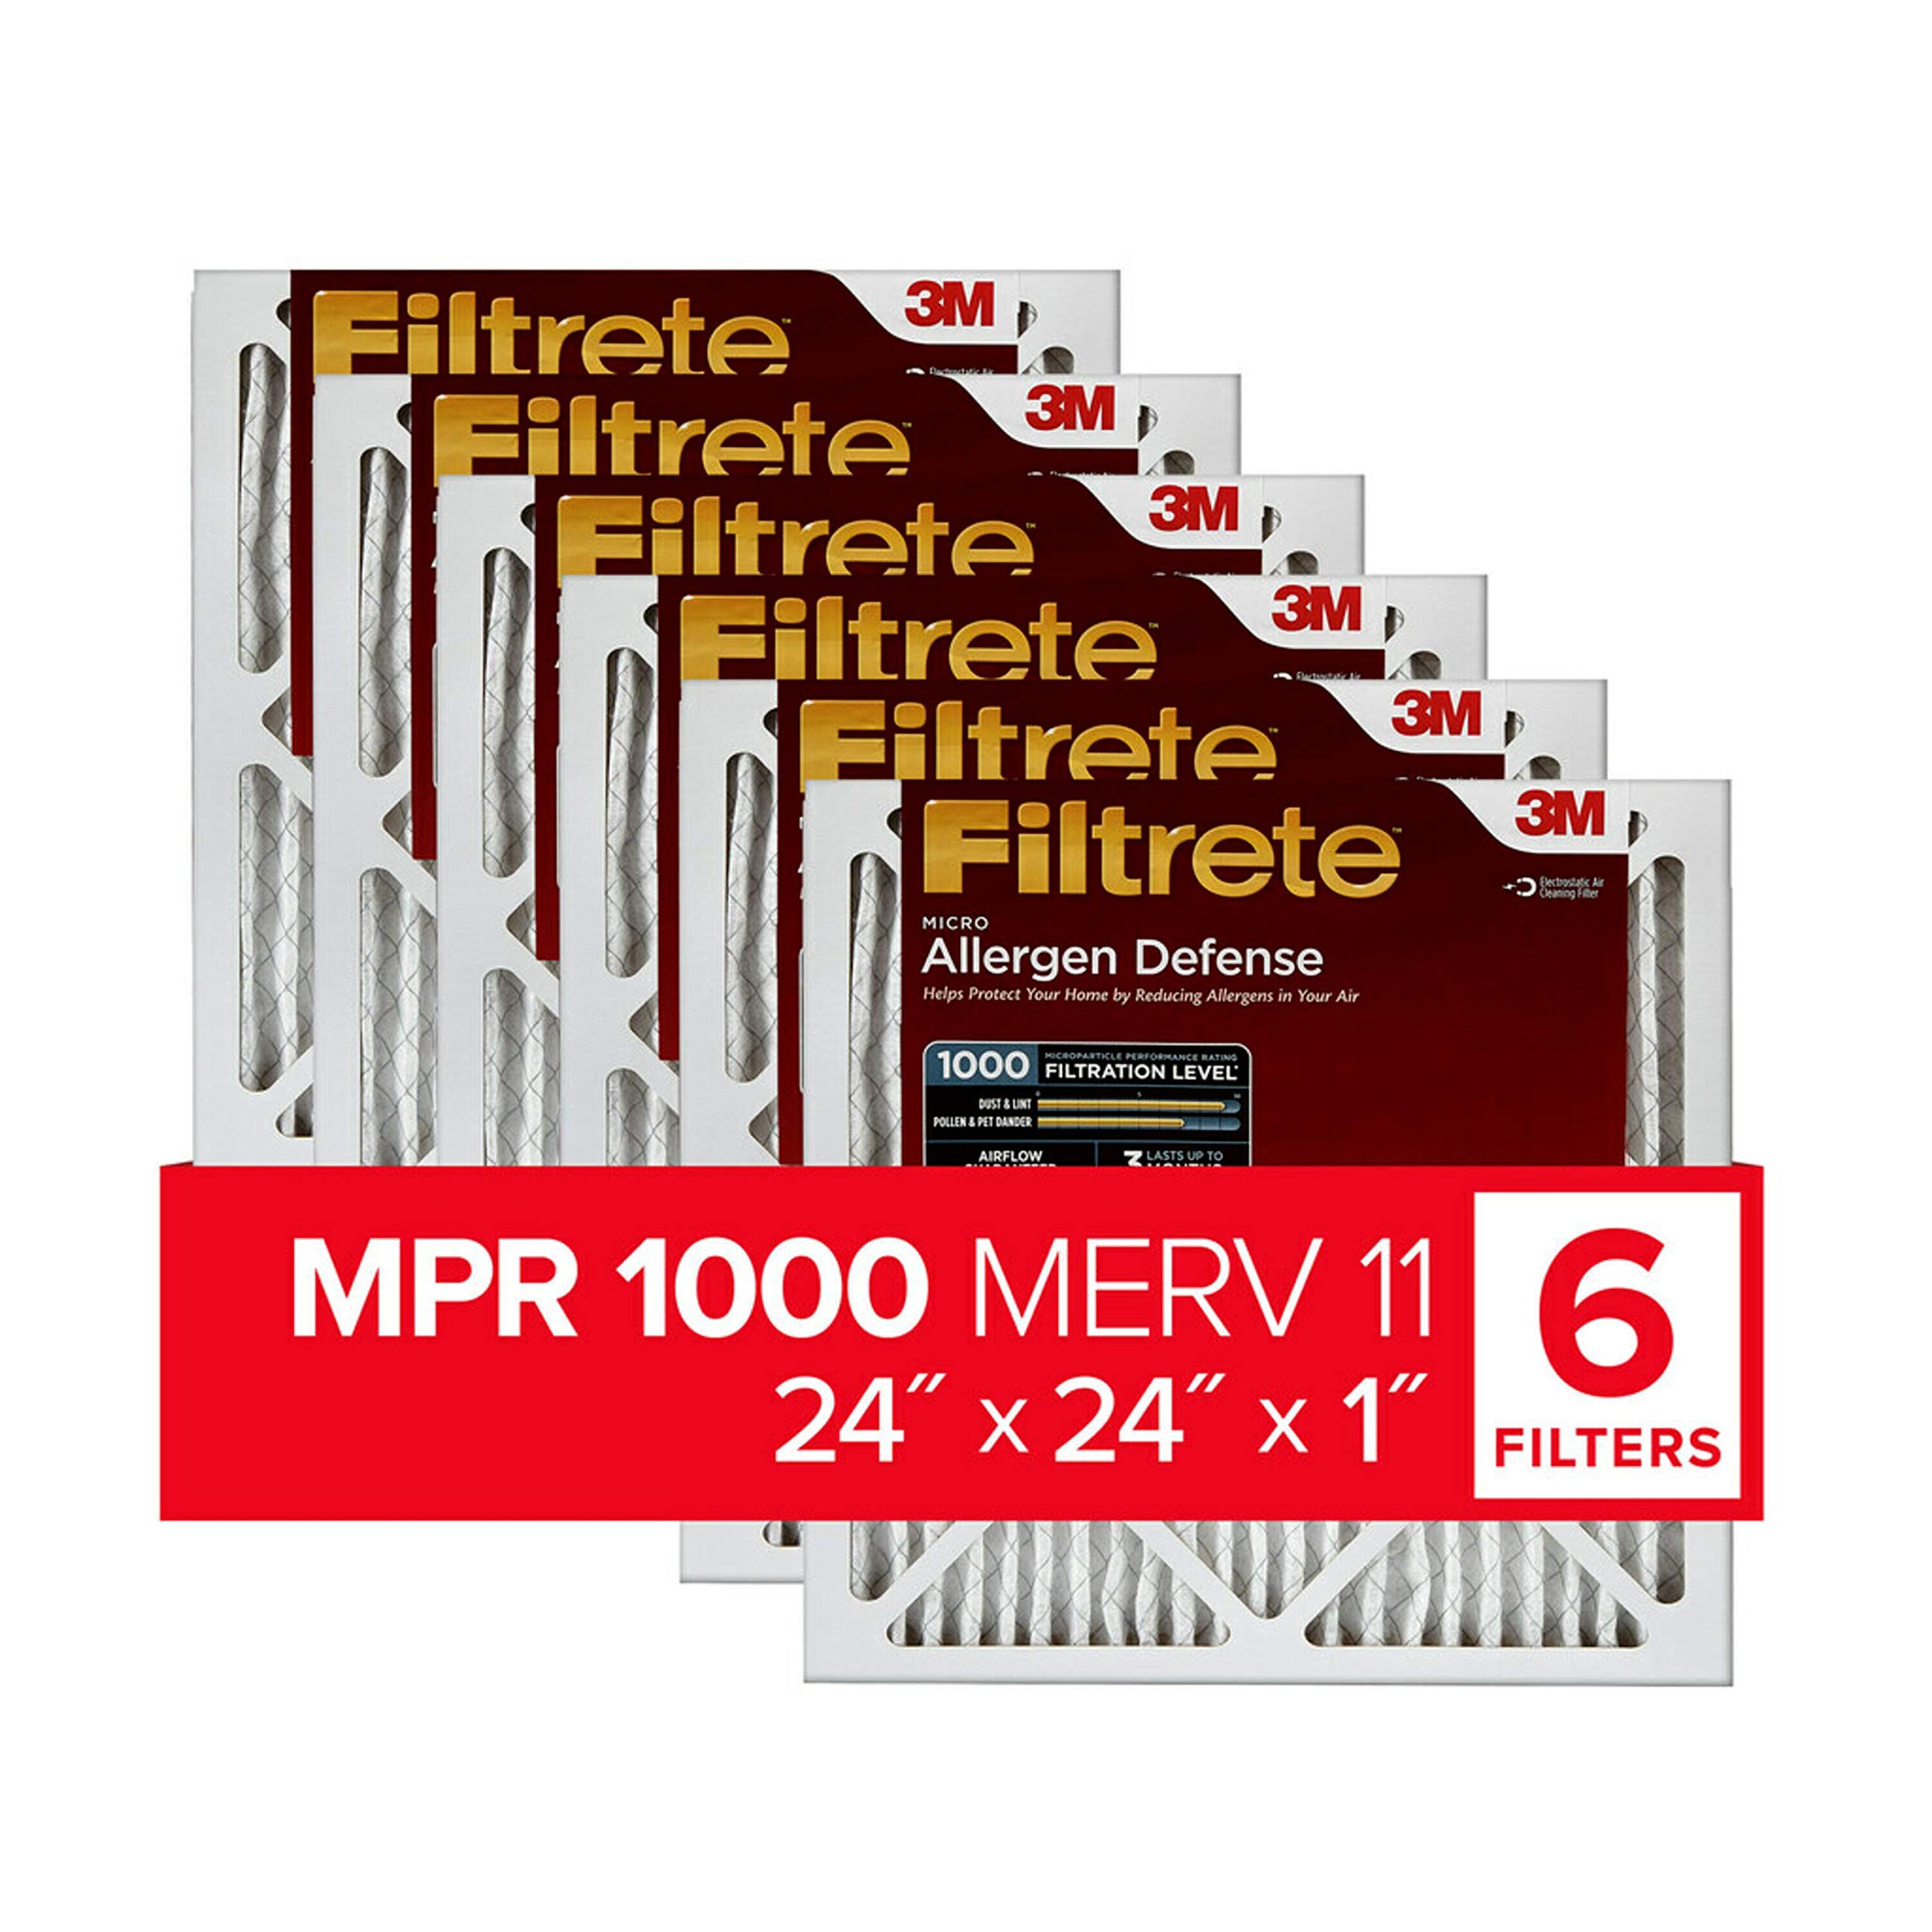 Filtrete 24x24x1 Air Filter MPR 1000 MERV 11, Allergen Defense, 6-Pack (exact dimensions 23.81x23.81x0.81)